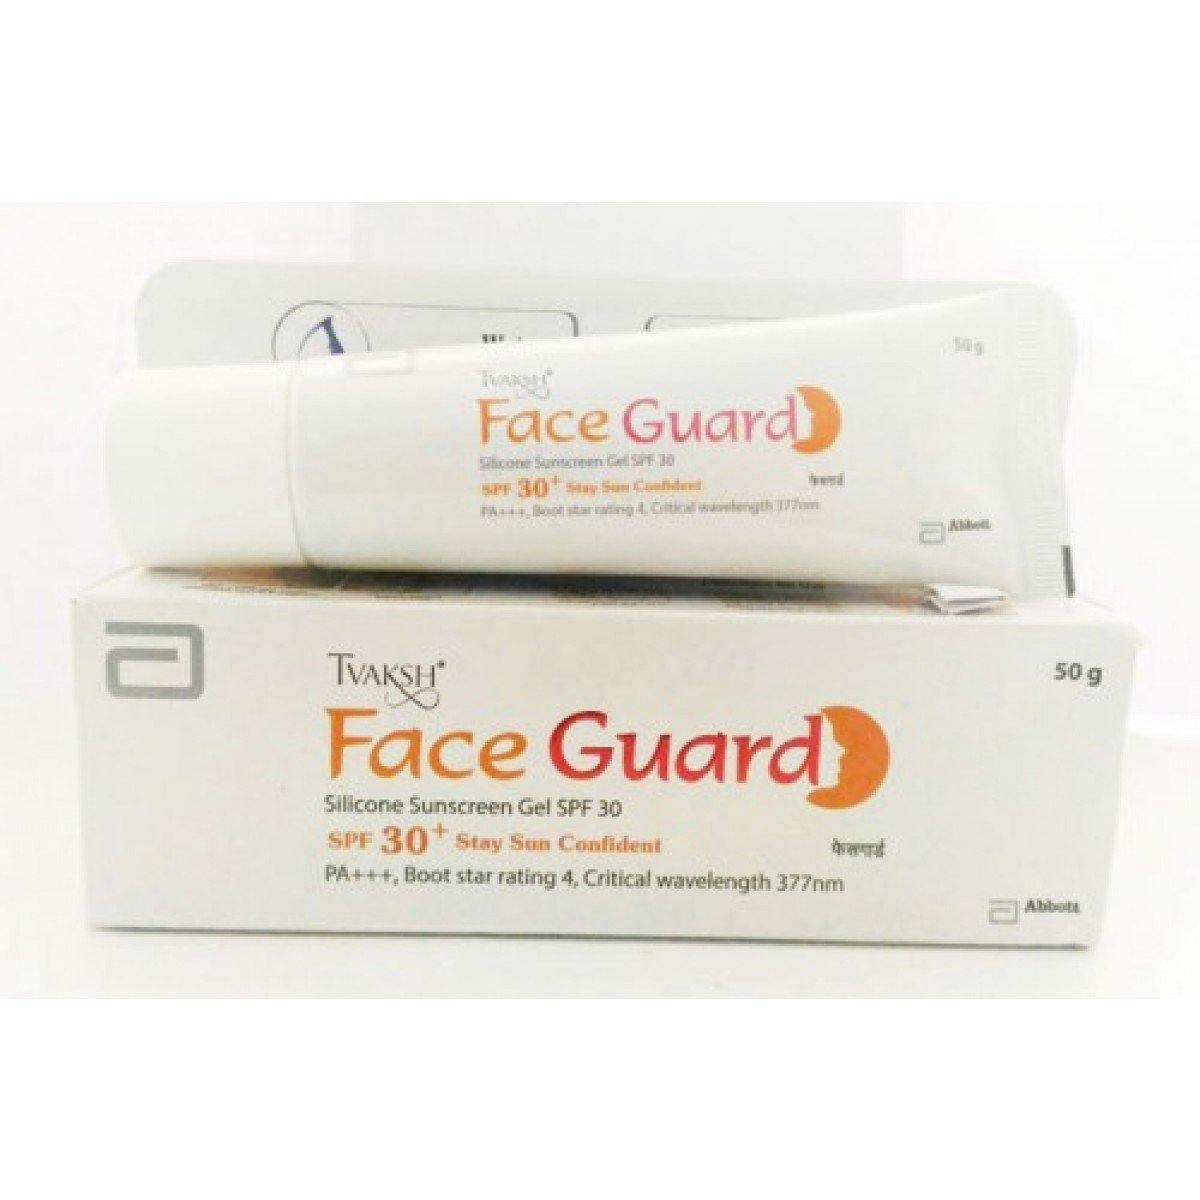 Abbott- Tvaksh Face Guard Silicone Sunscreen Gel SPF30 -30g - MySkinCare.in